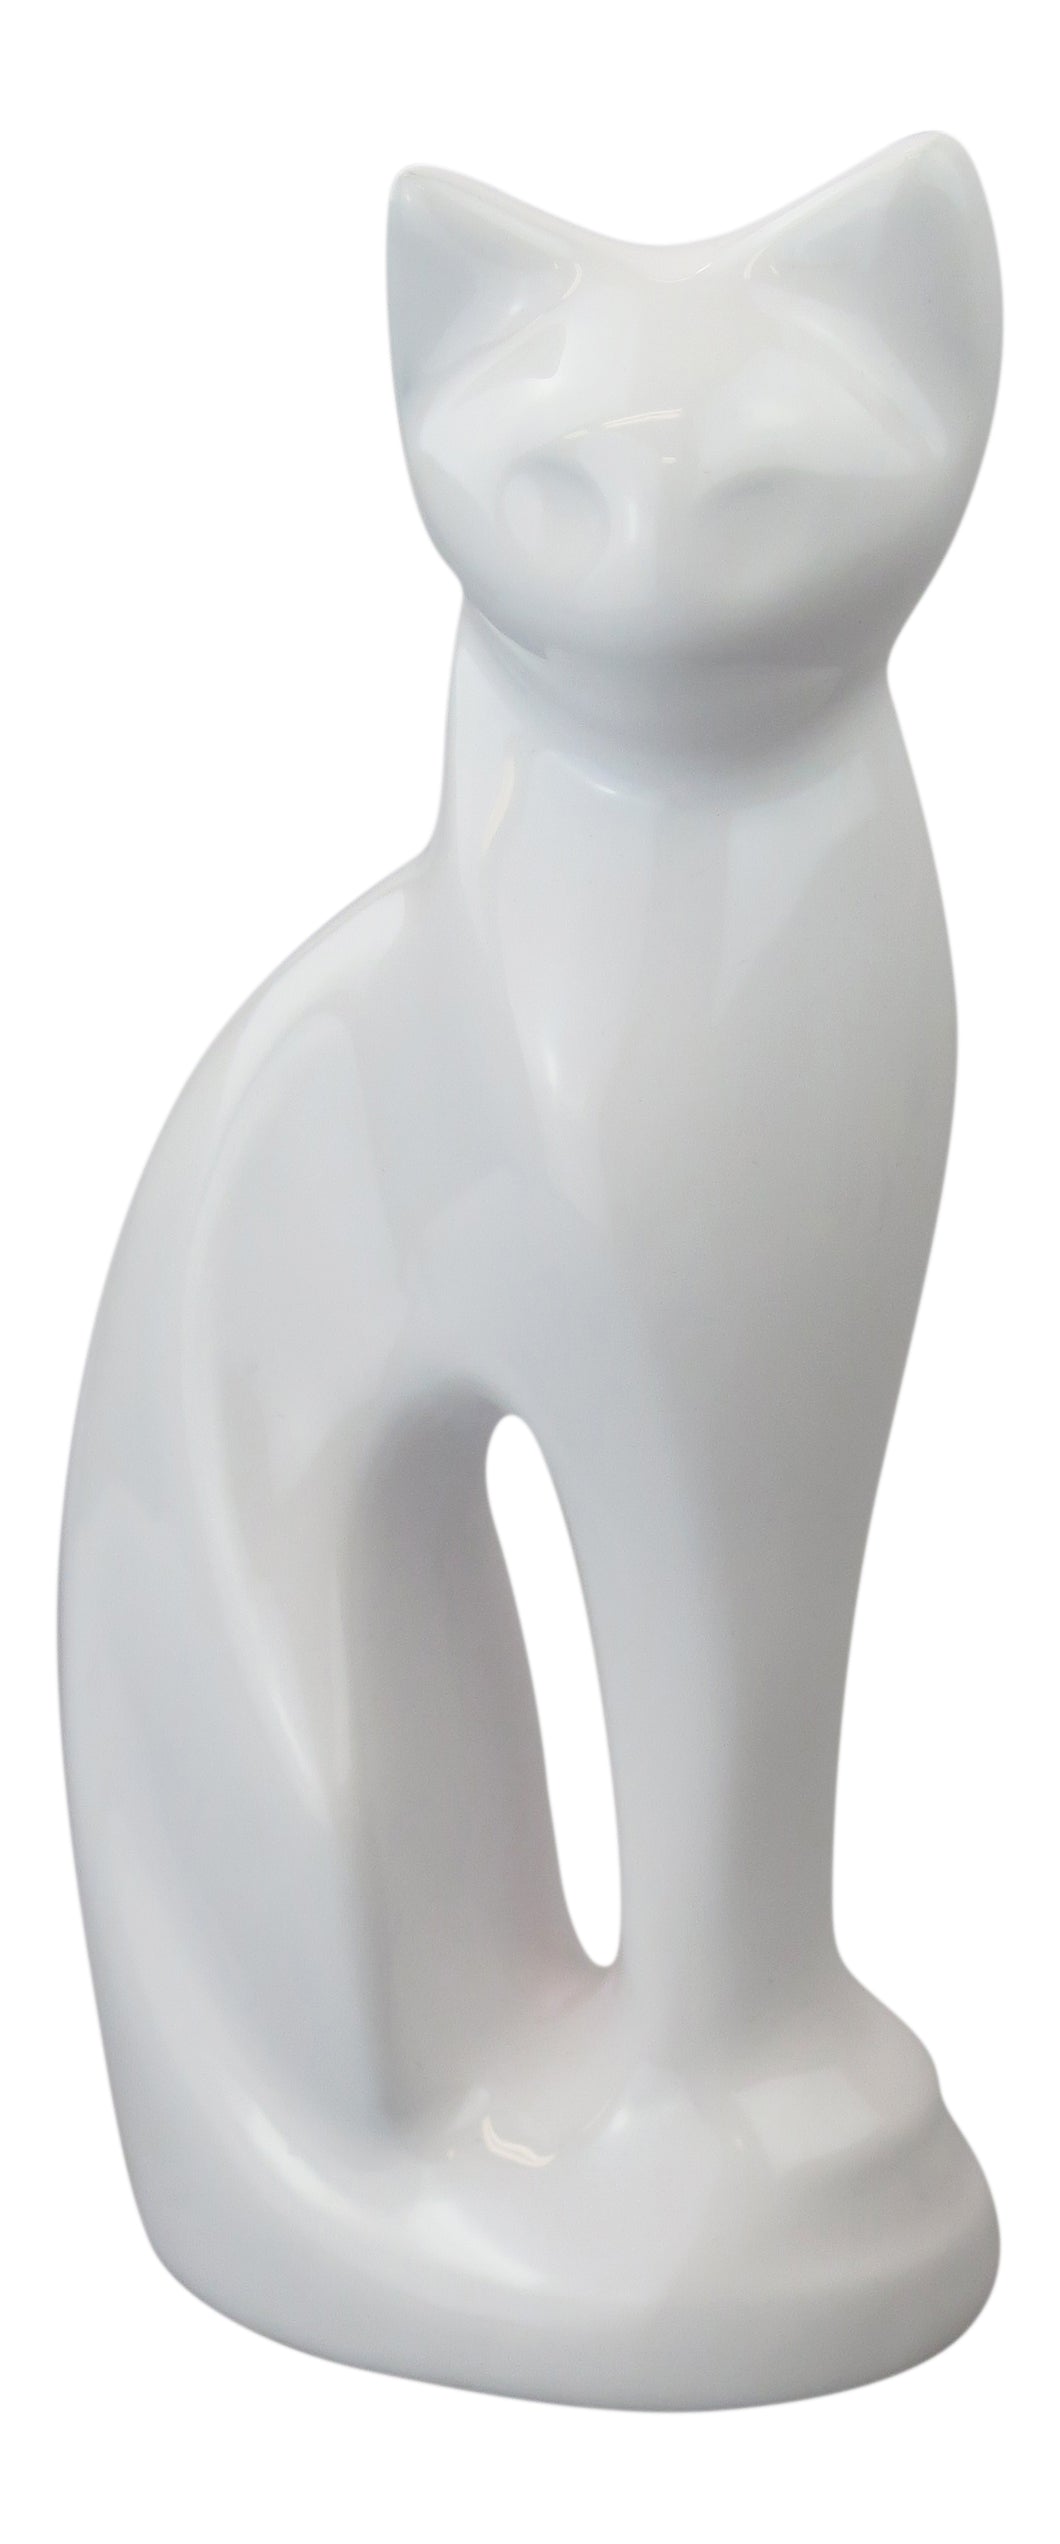 White Cat Figurine Pet Ashes Urn | Love to Treasure 